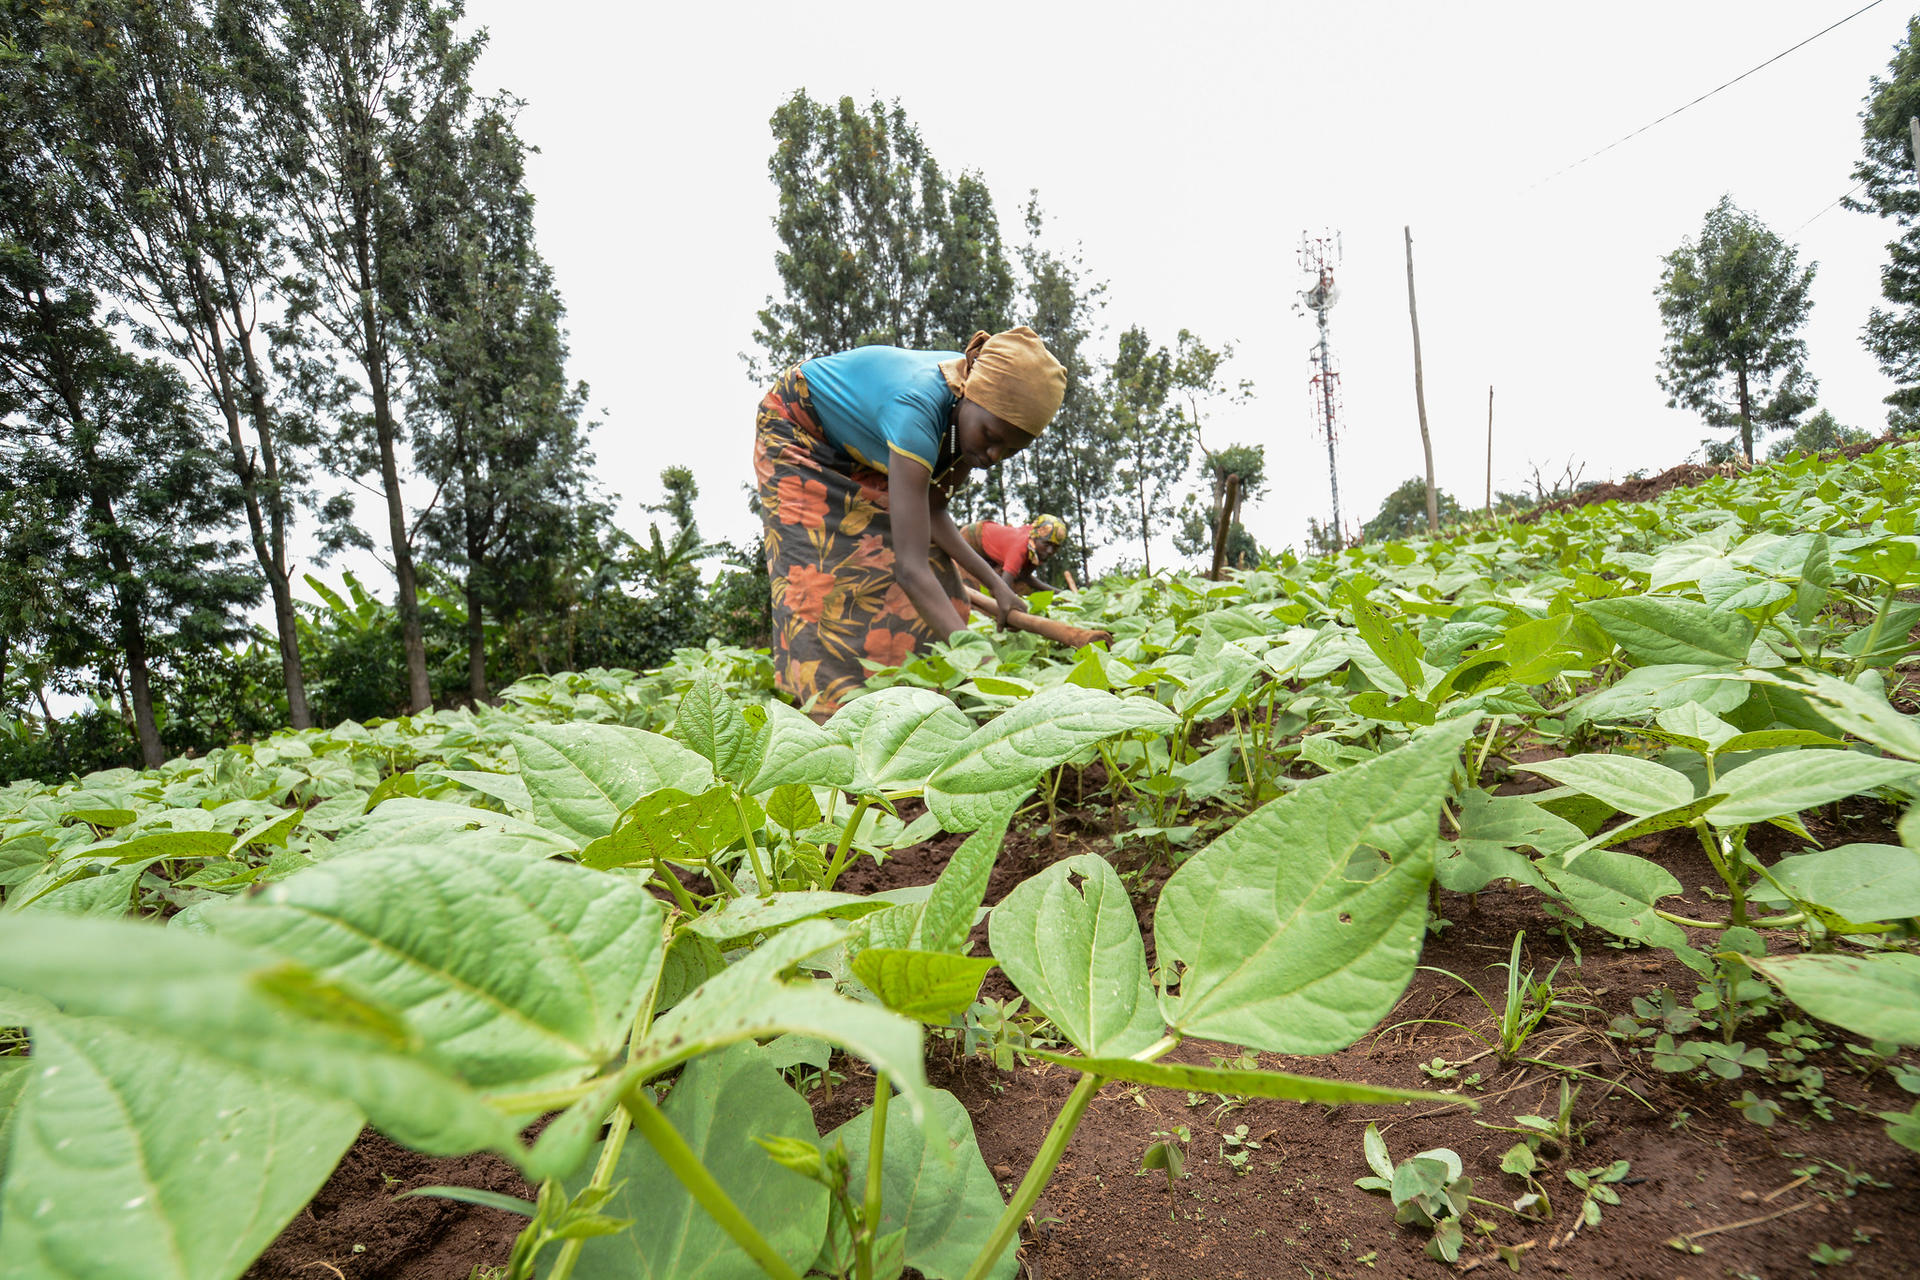 Bean farmers tending to their crops in Burundi.